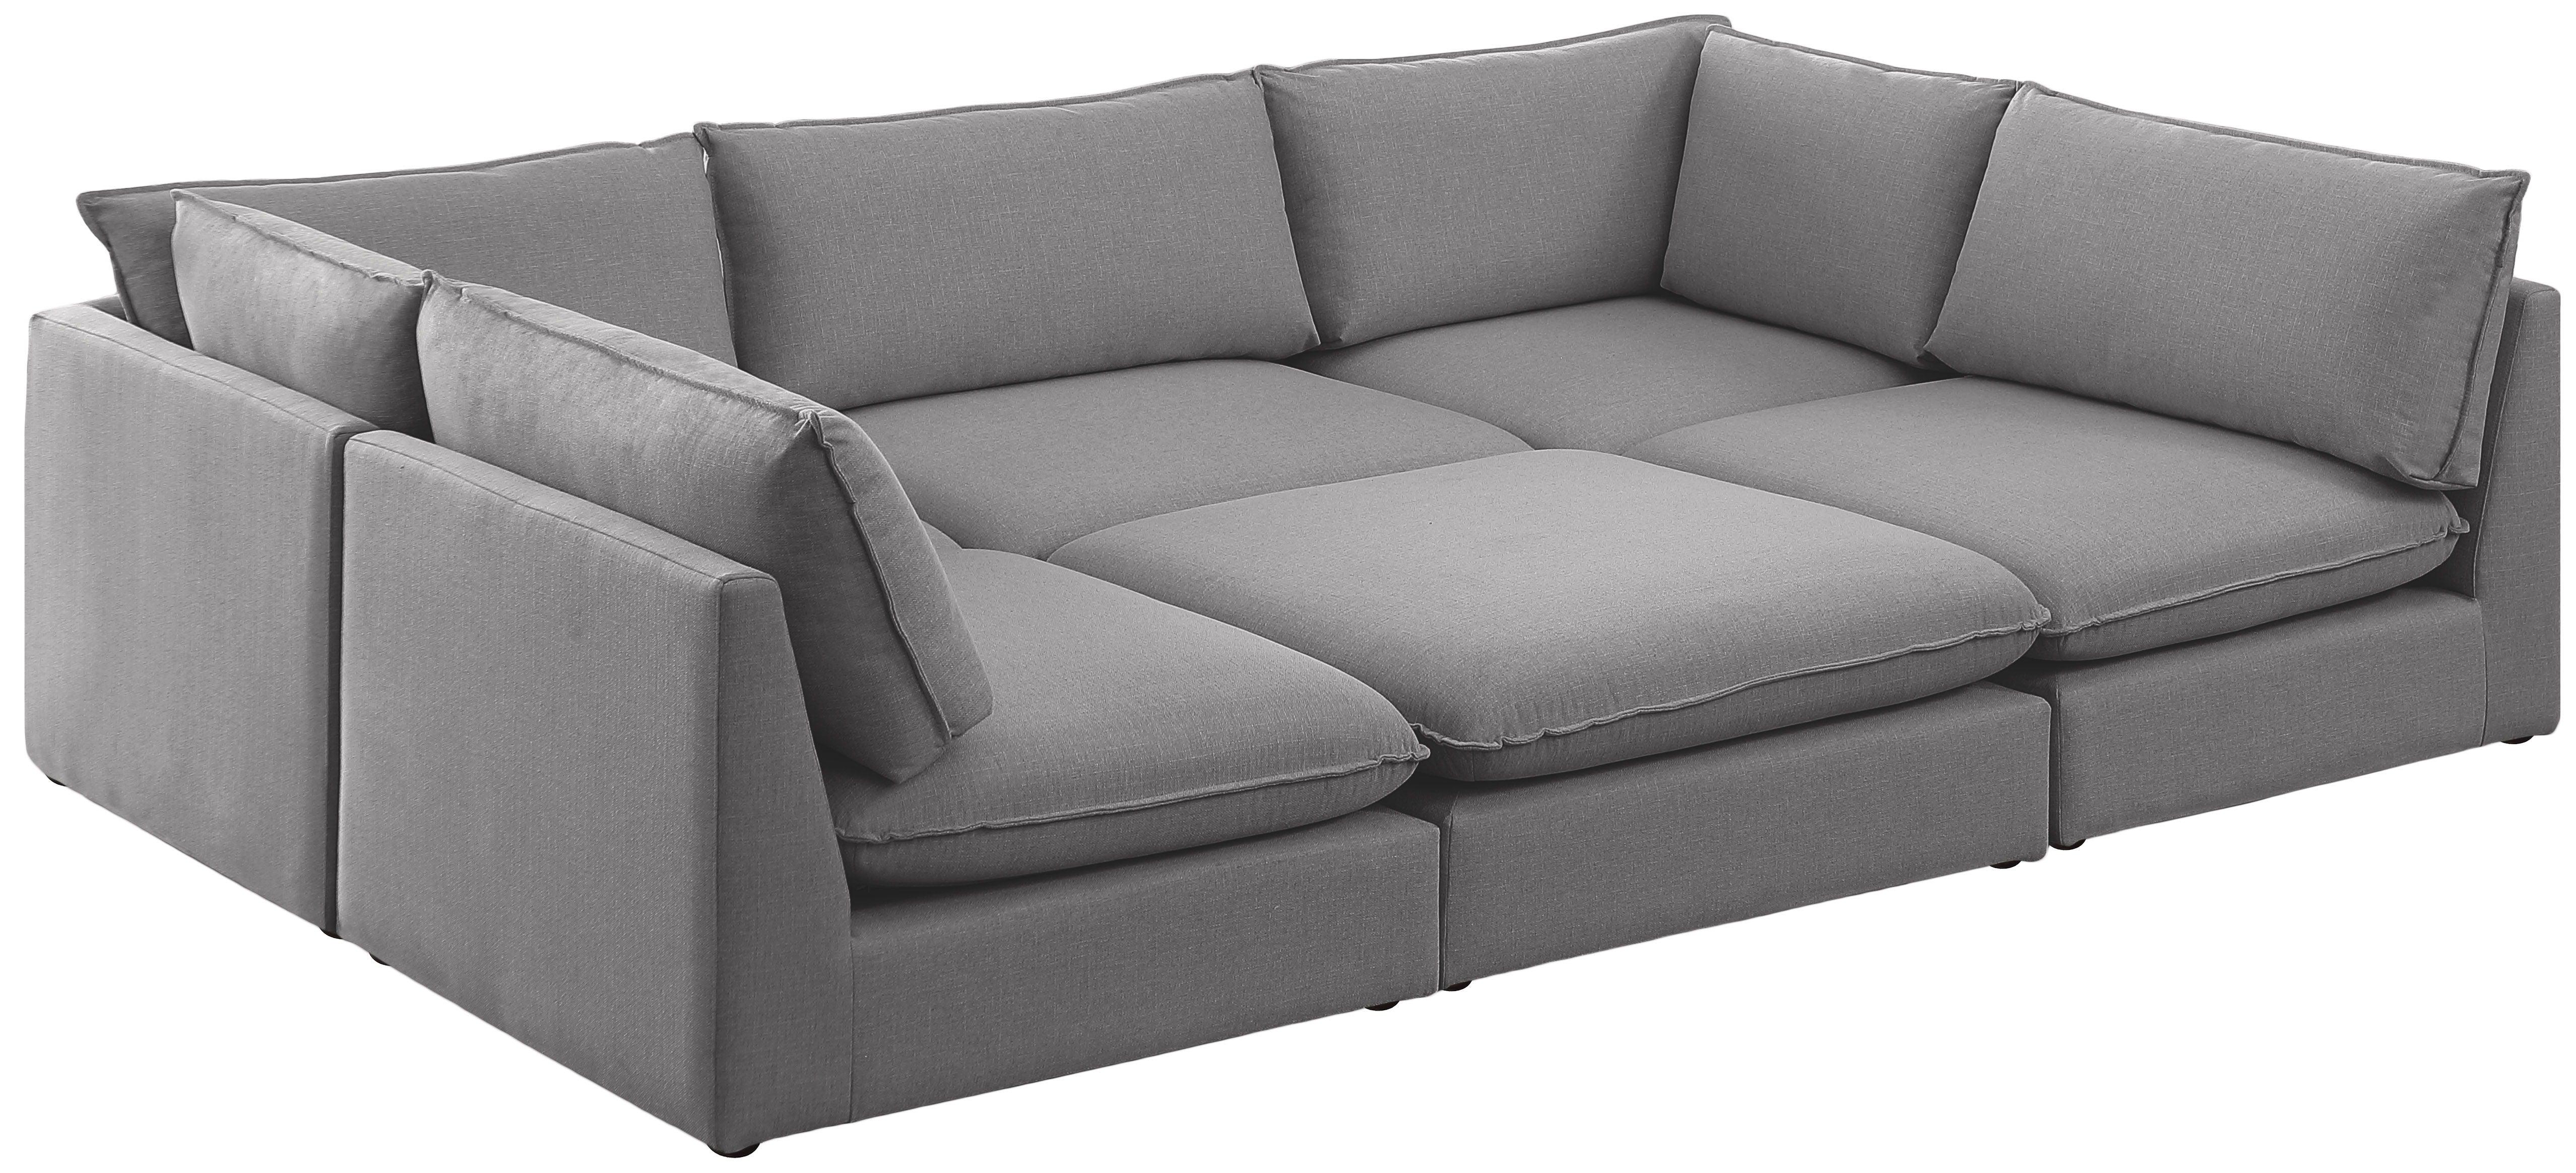 Meridian Furniture - Mackenzie - Modular Sectional 6 Piece - Gray - 5th Avenue Furniture